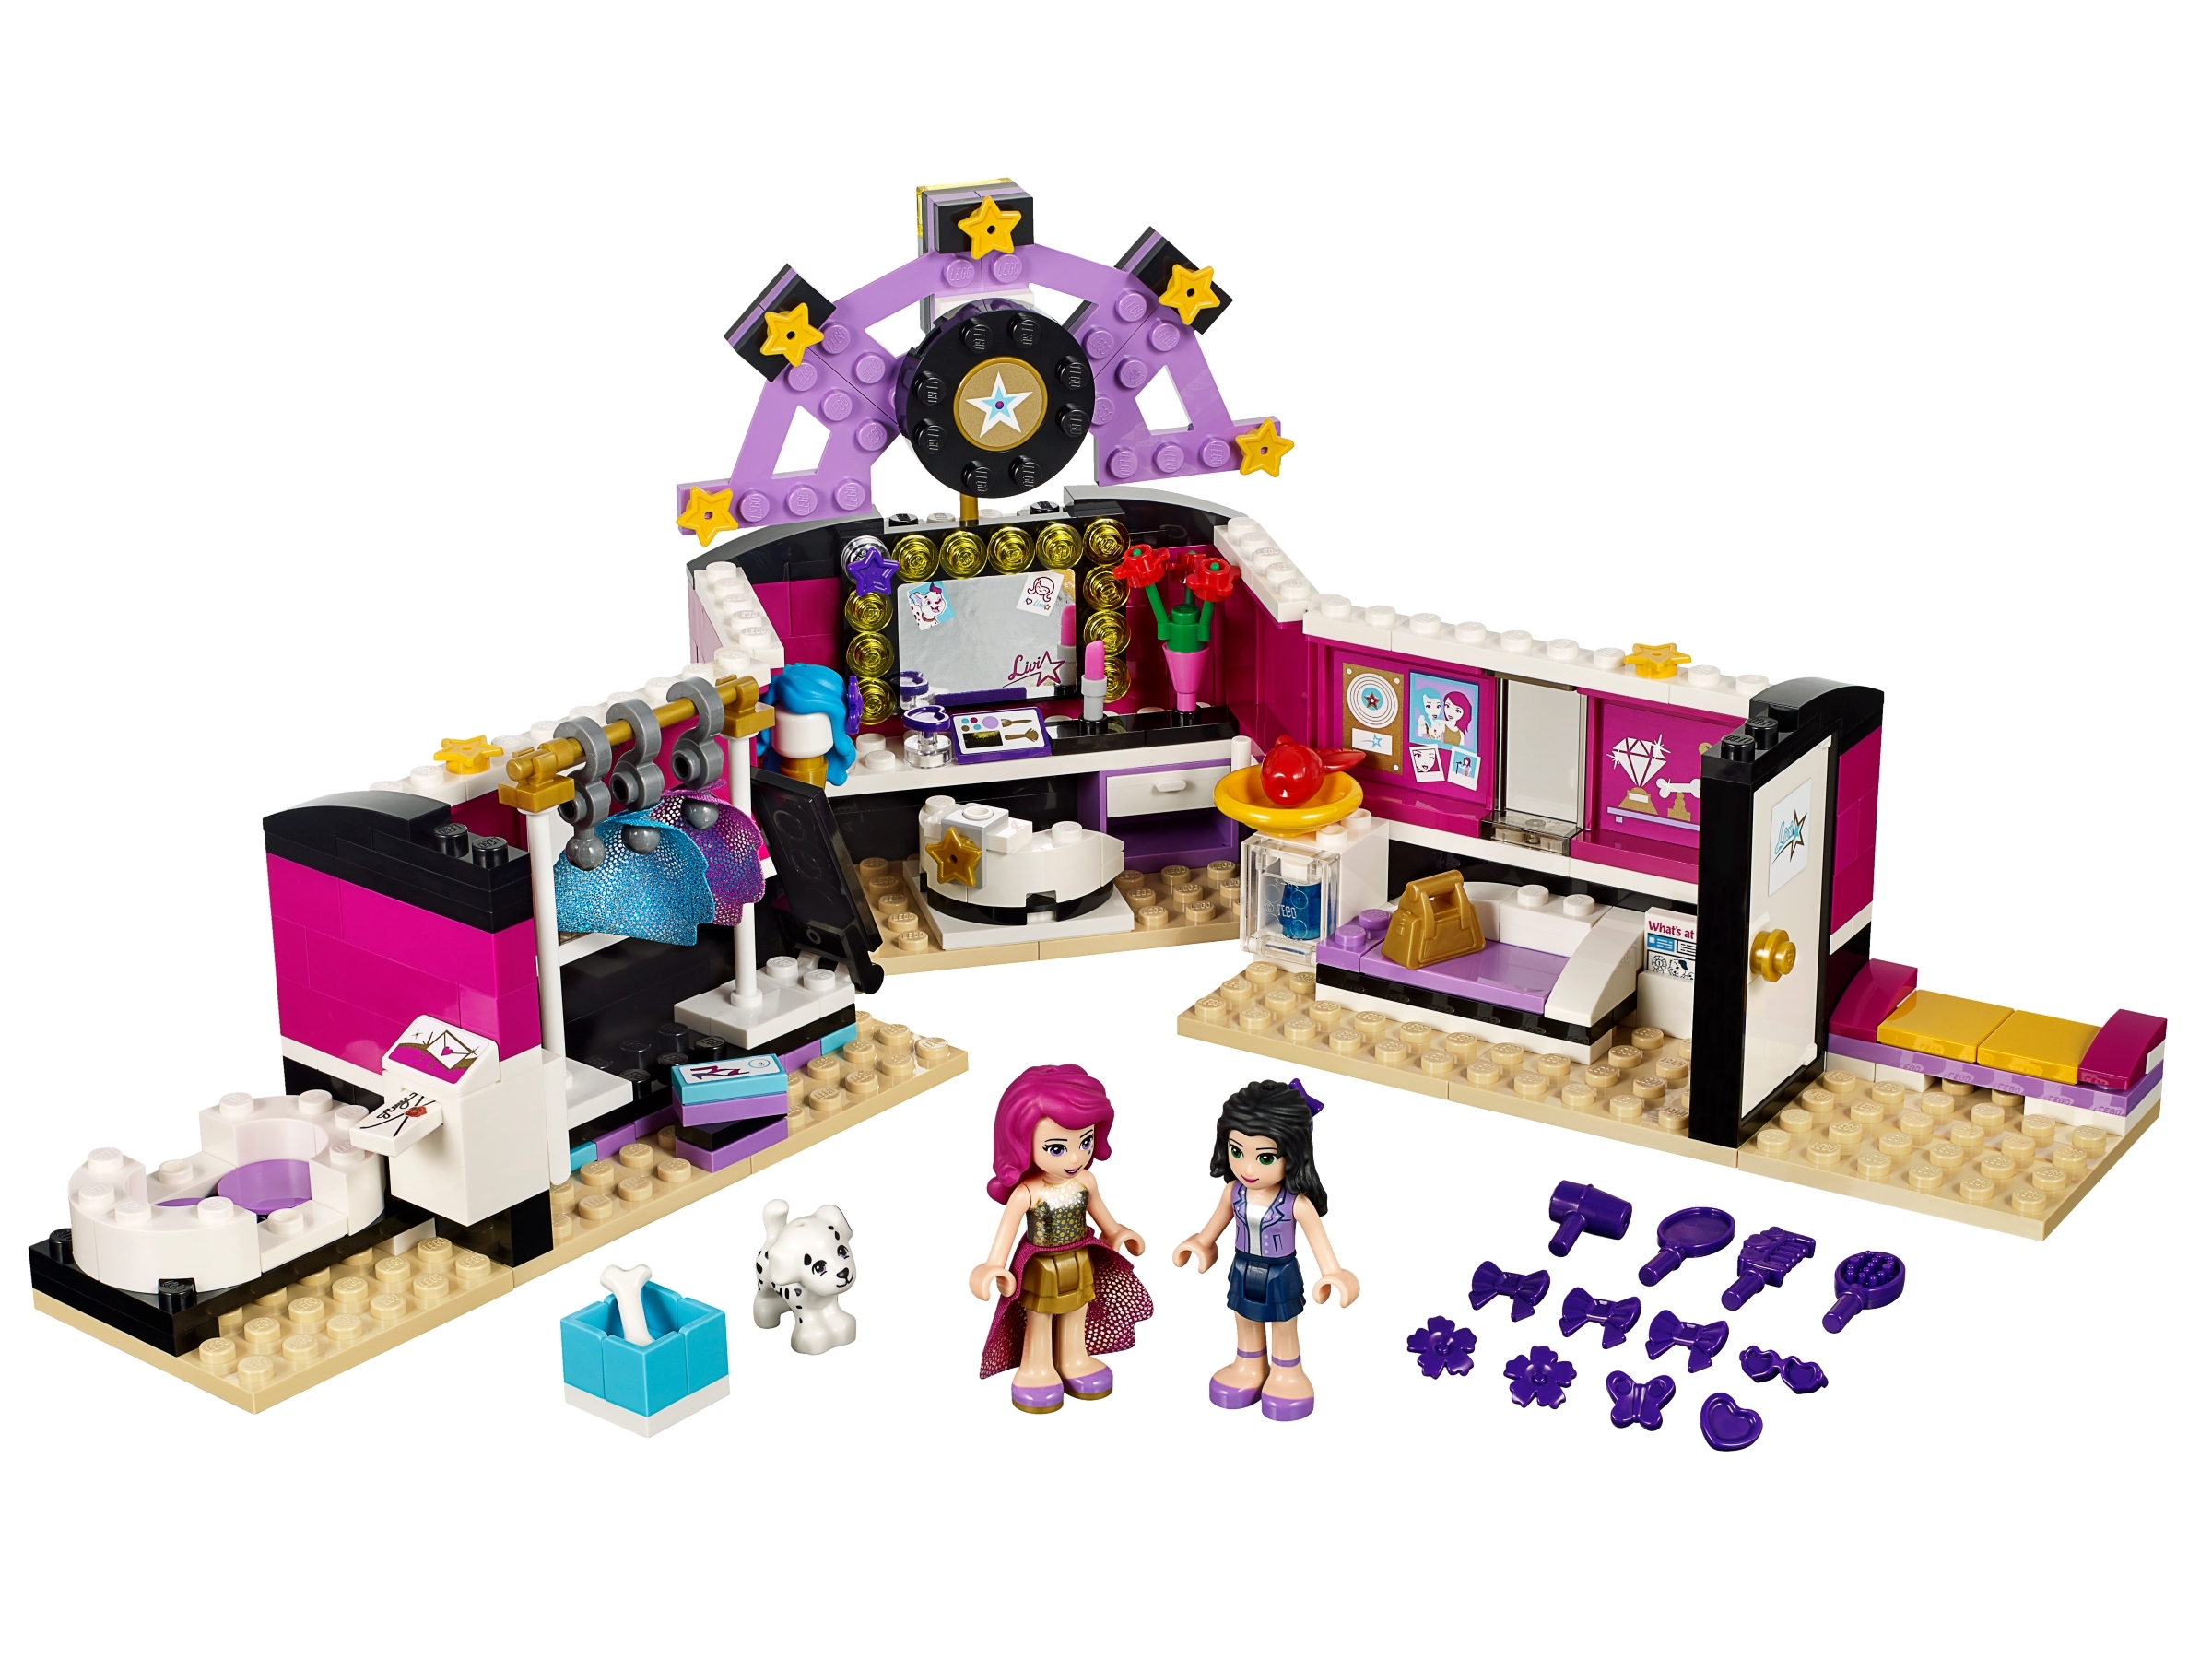 Pop Star Dressing 41104 | Friends | Buy online the Official LEGO® Shop US